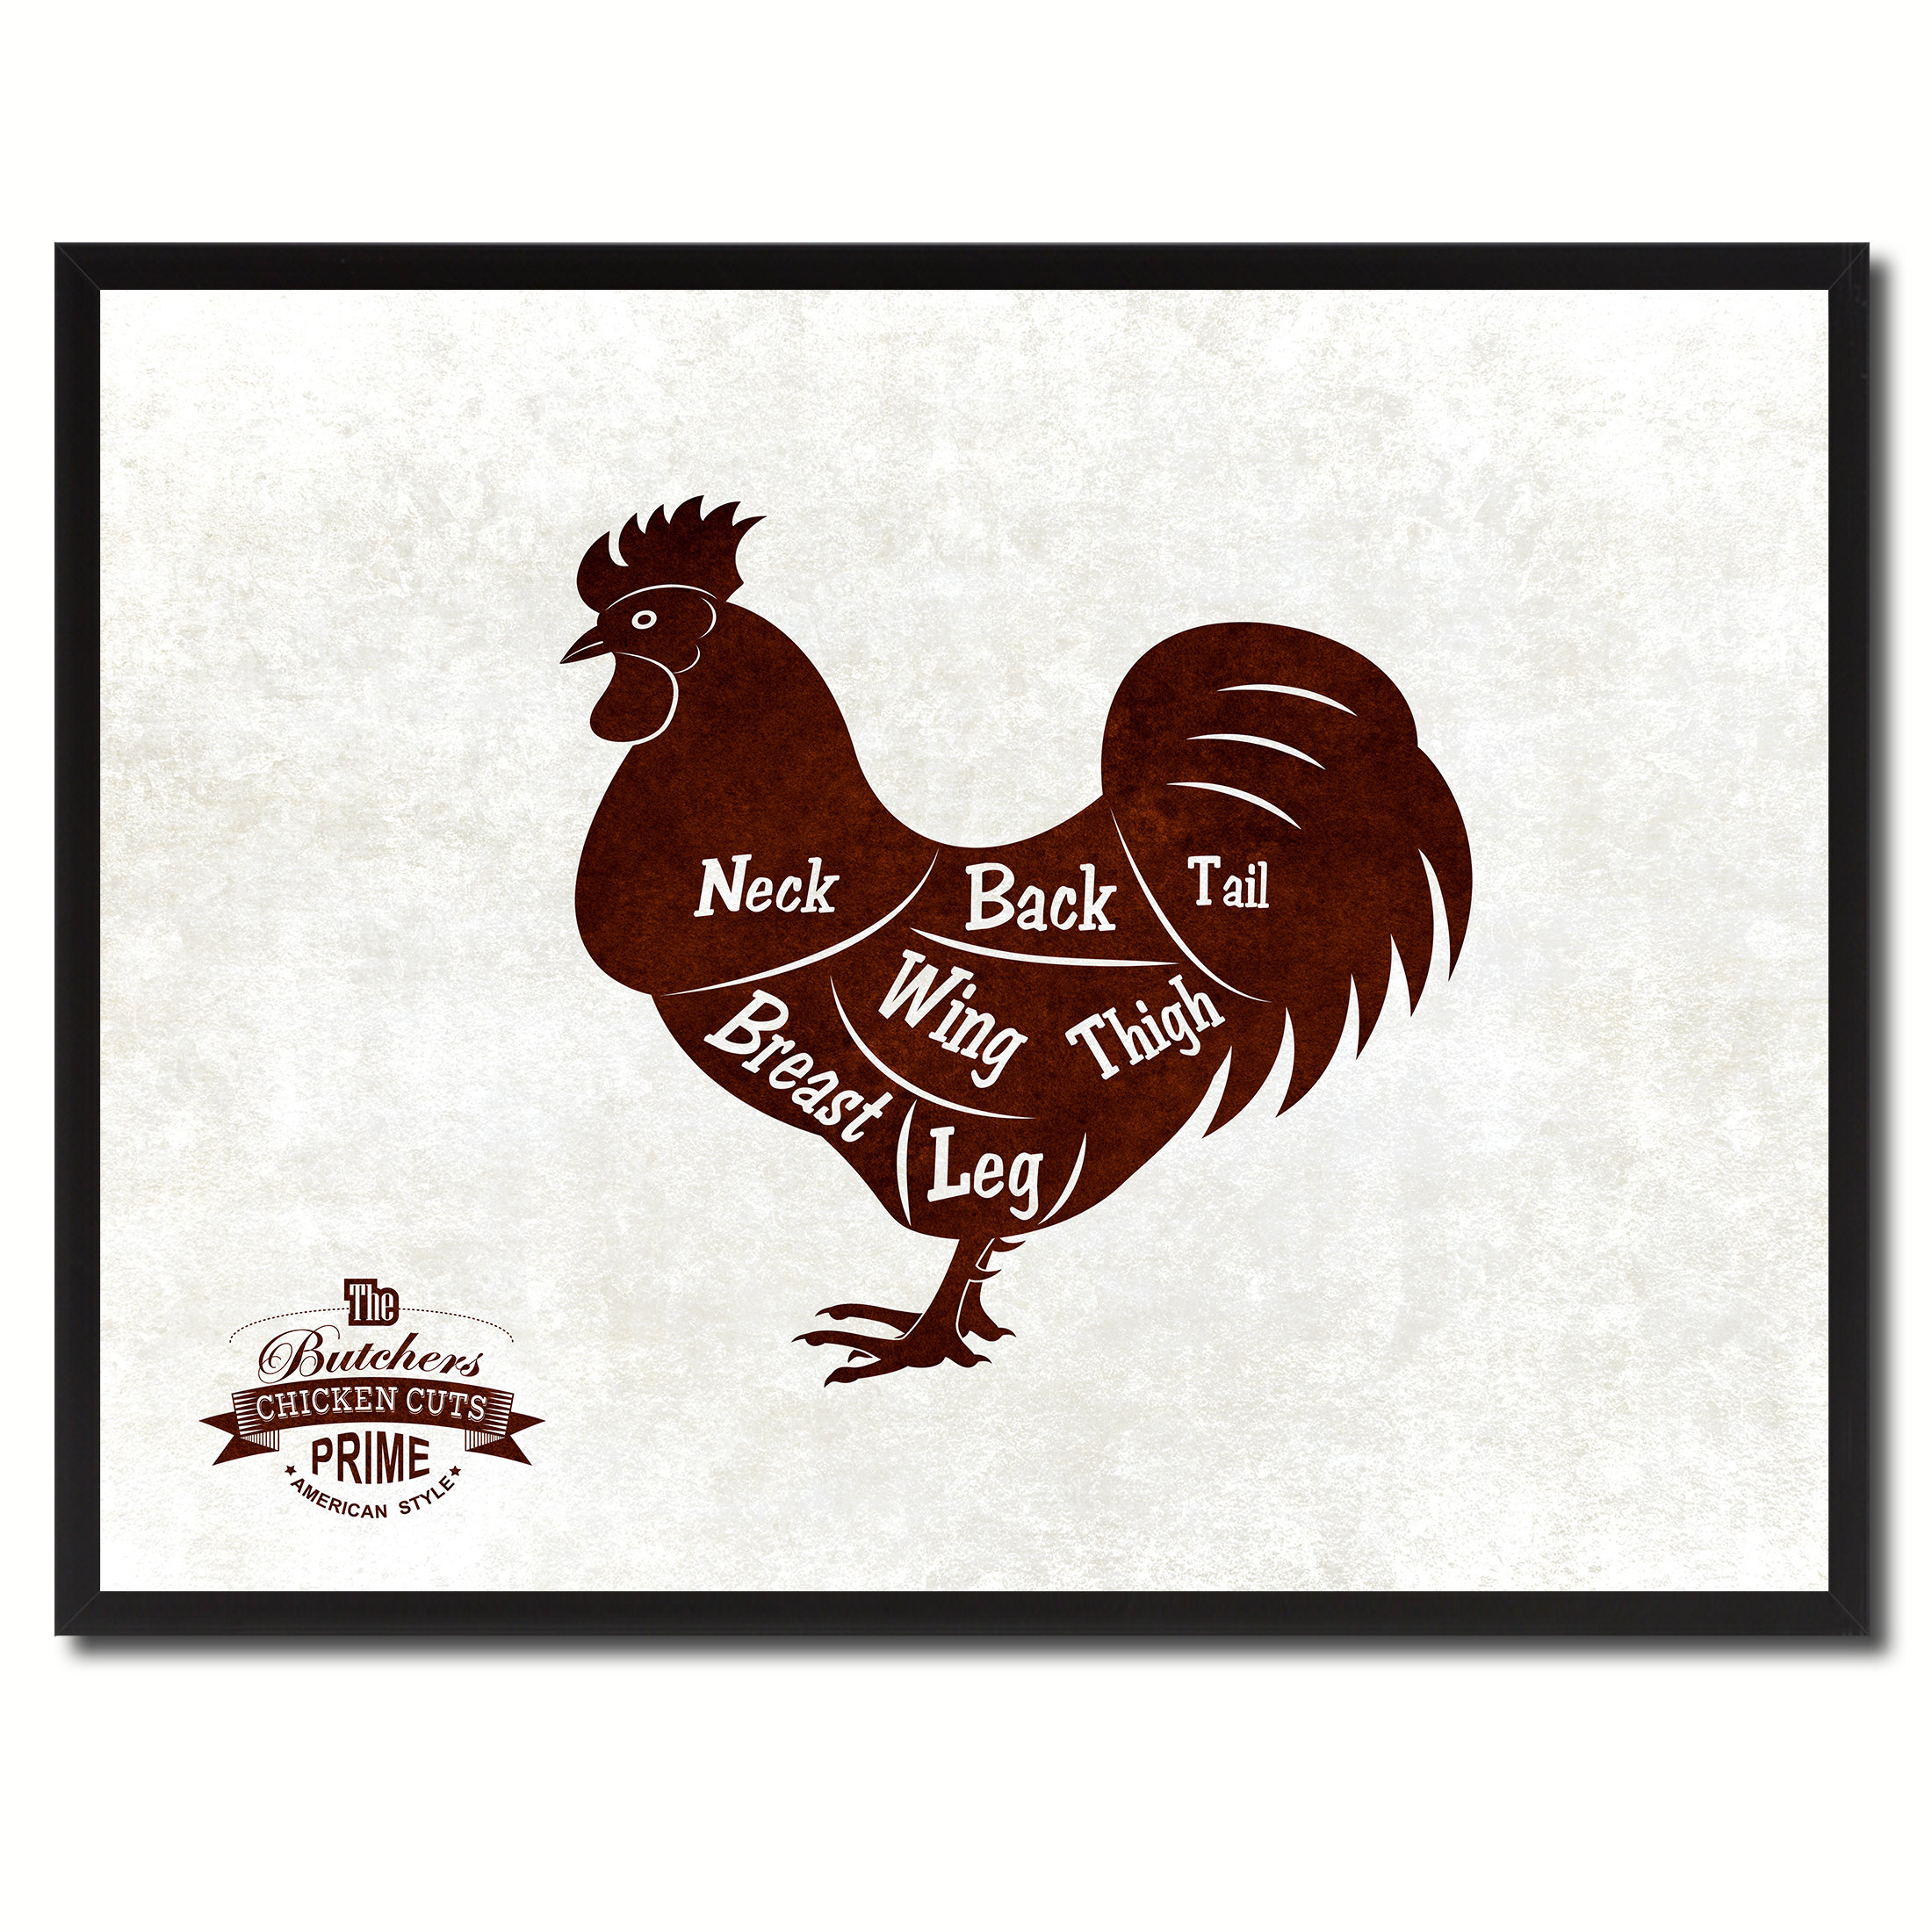 chicken meat chart